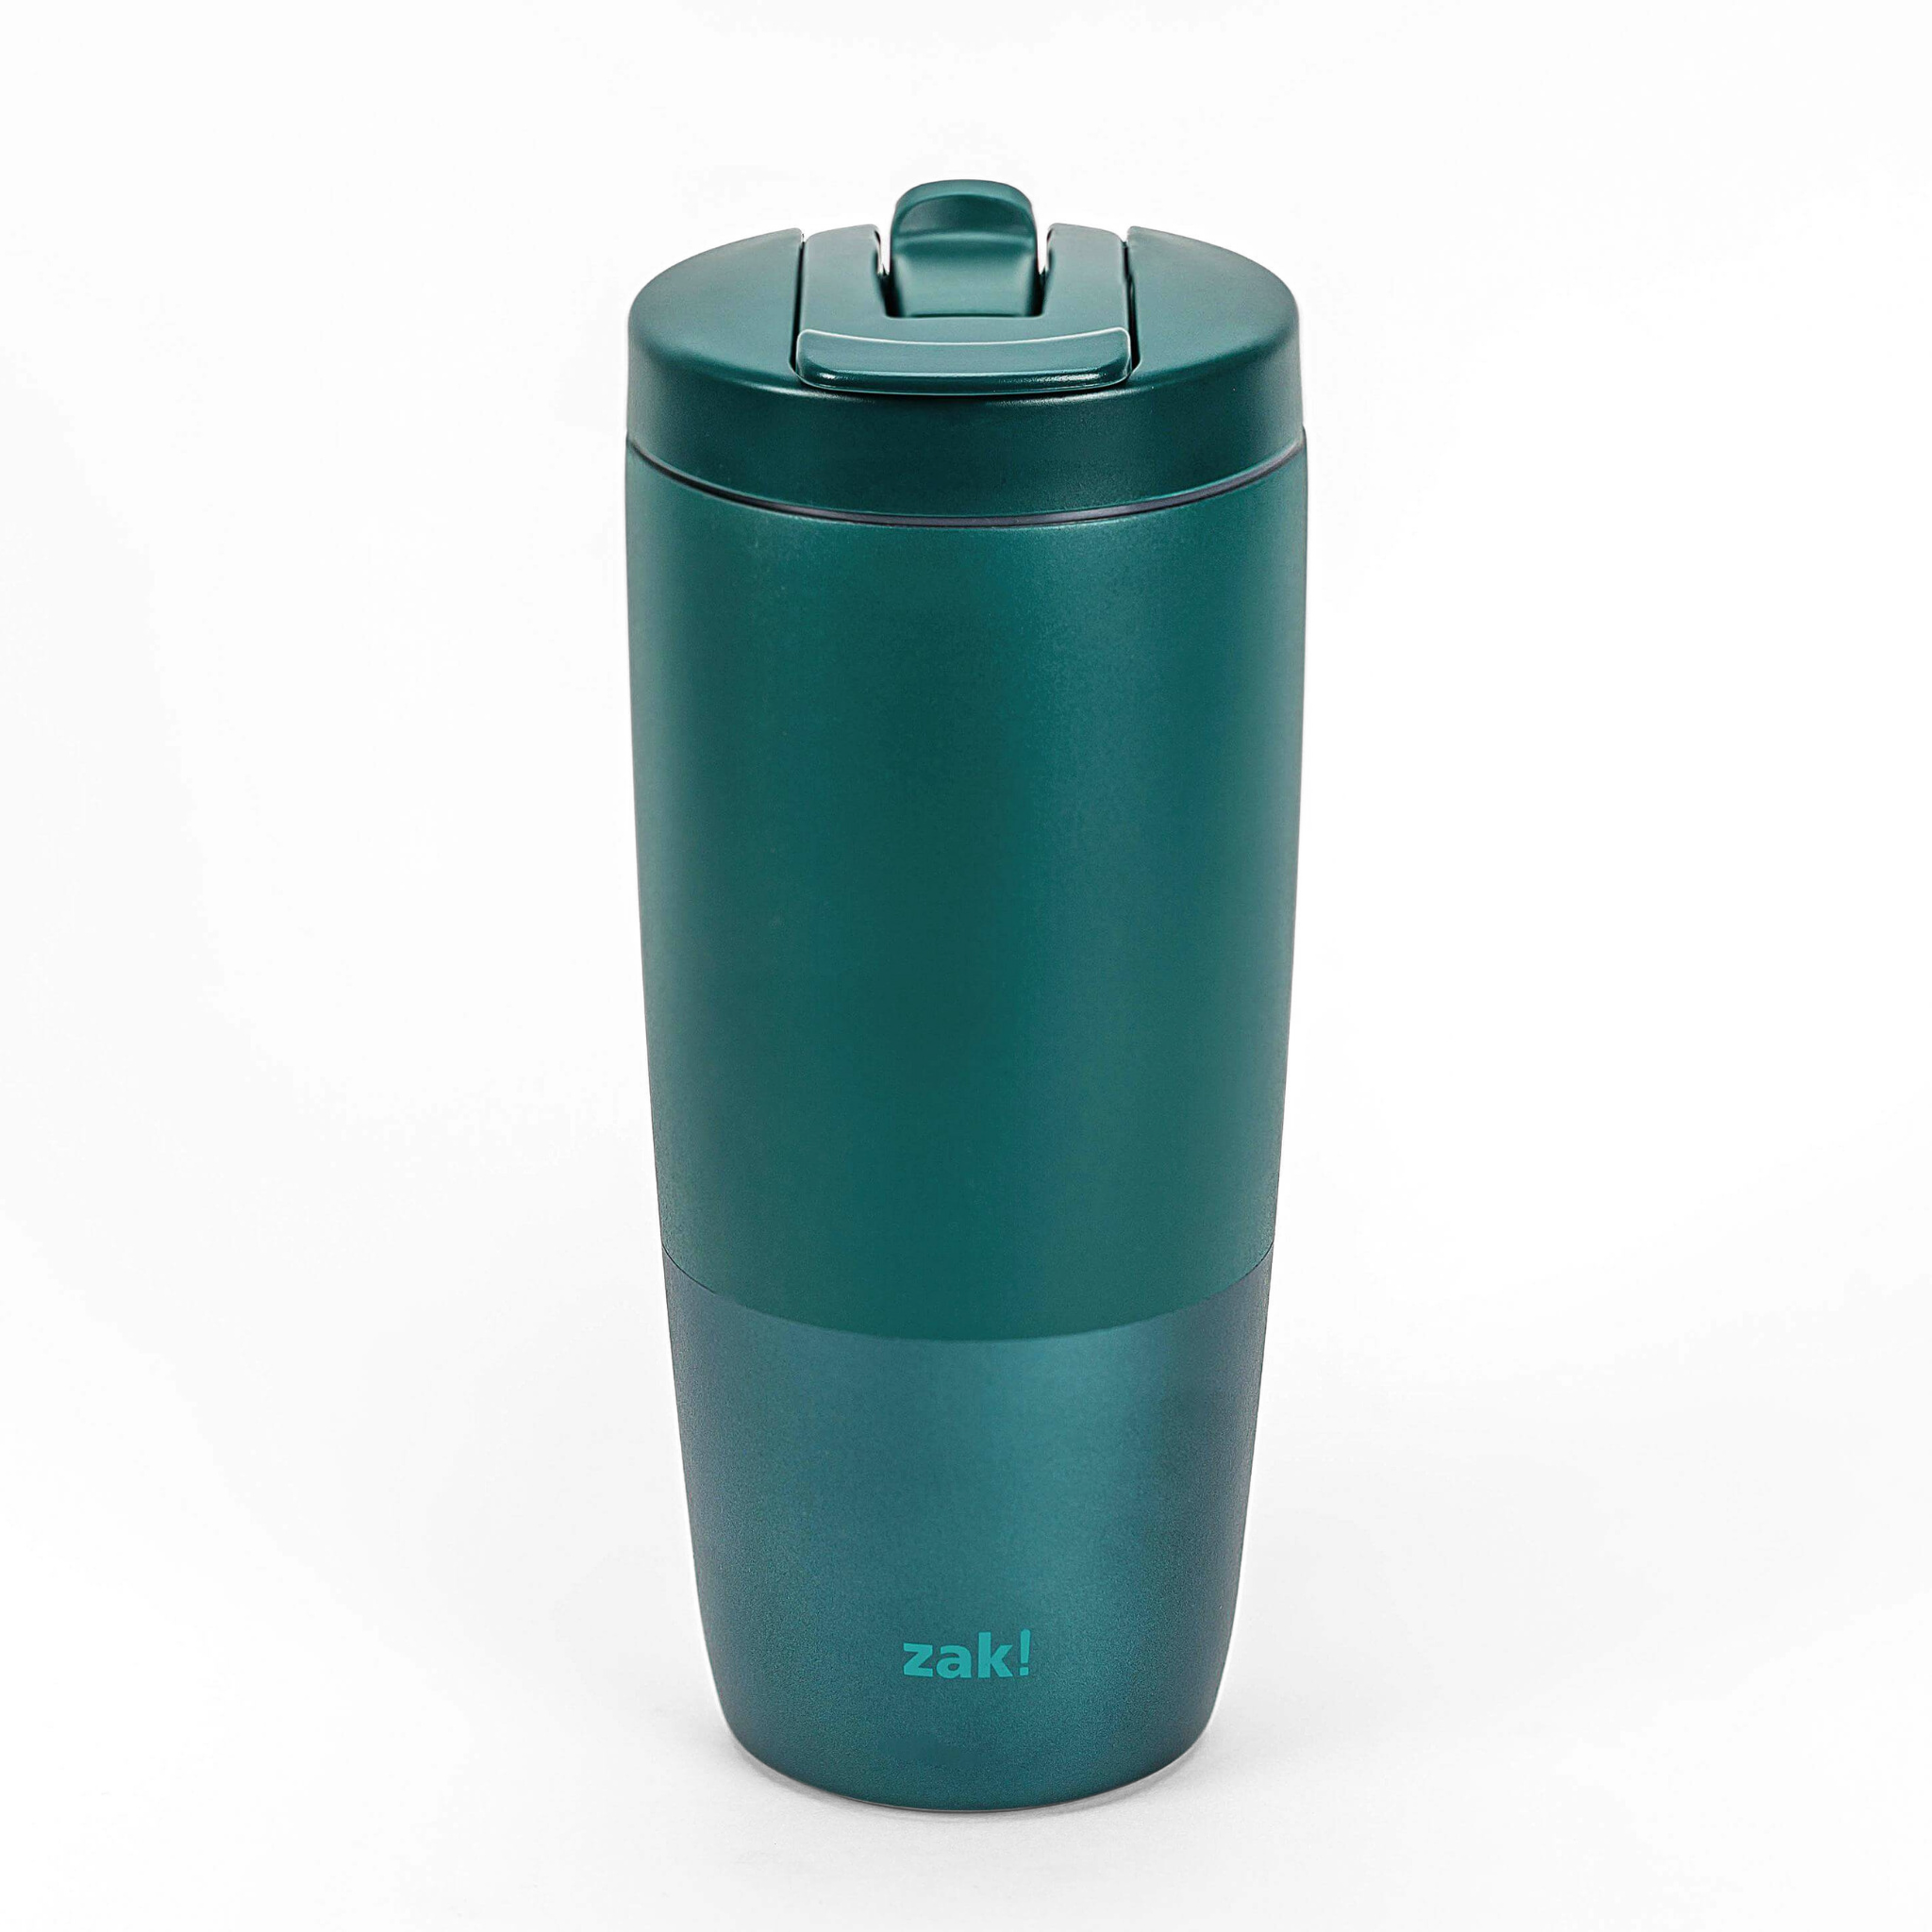 Copco 16 Oz. Travel Mug With Spillproof Lid BPA Plastic Purple